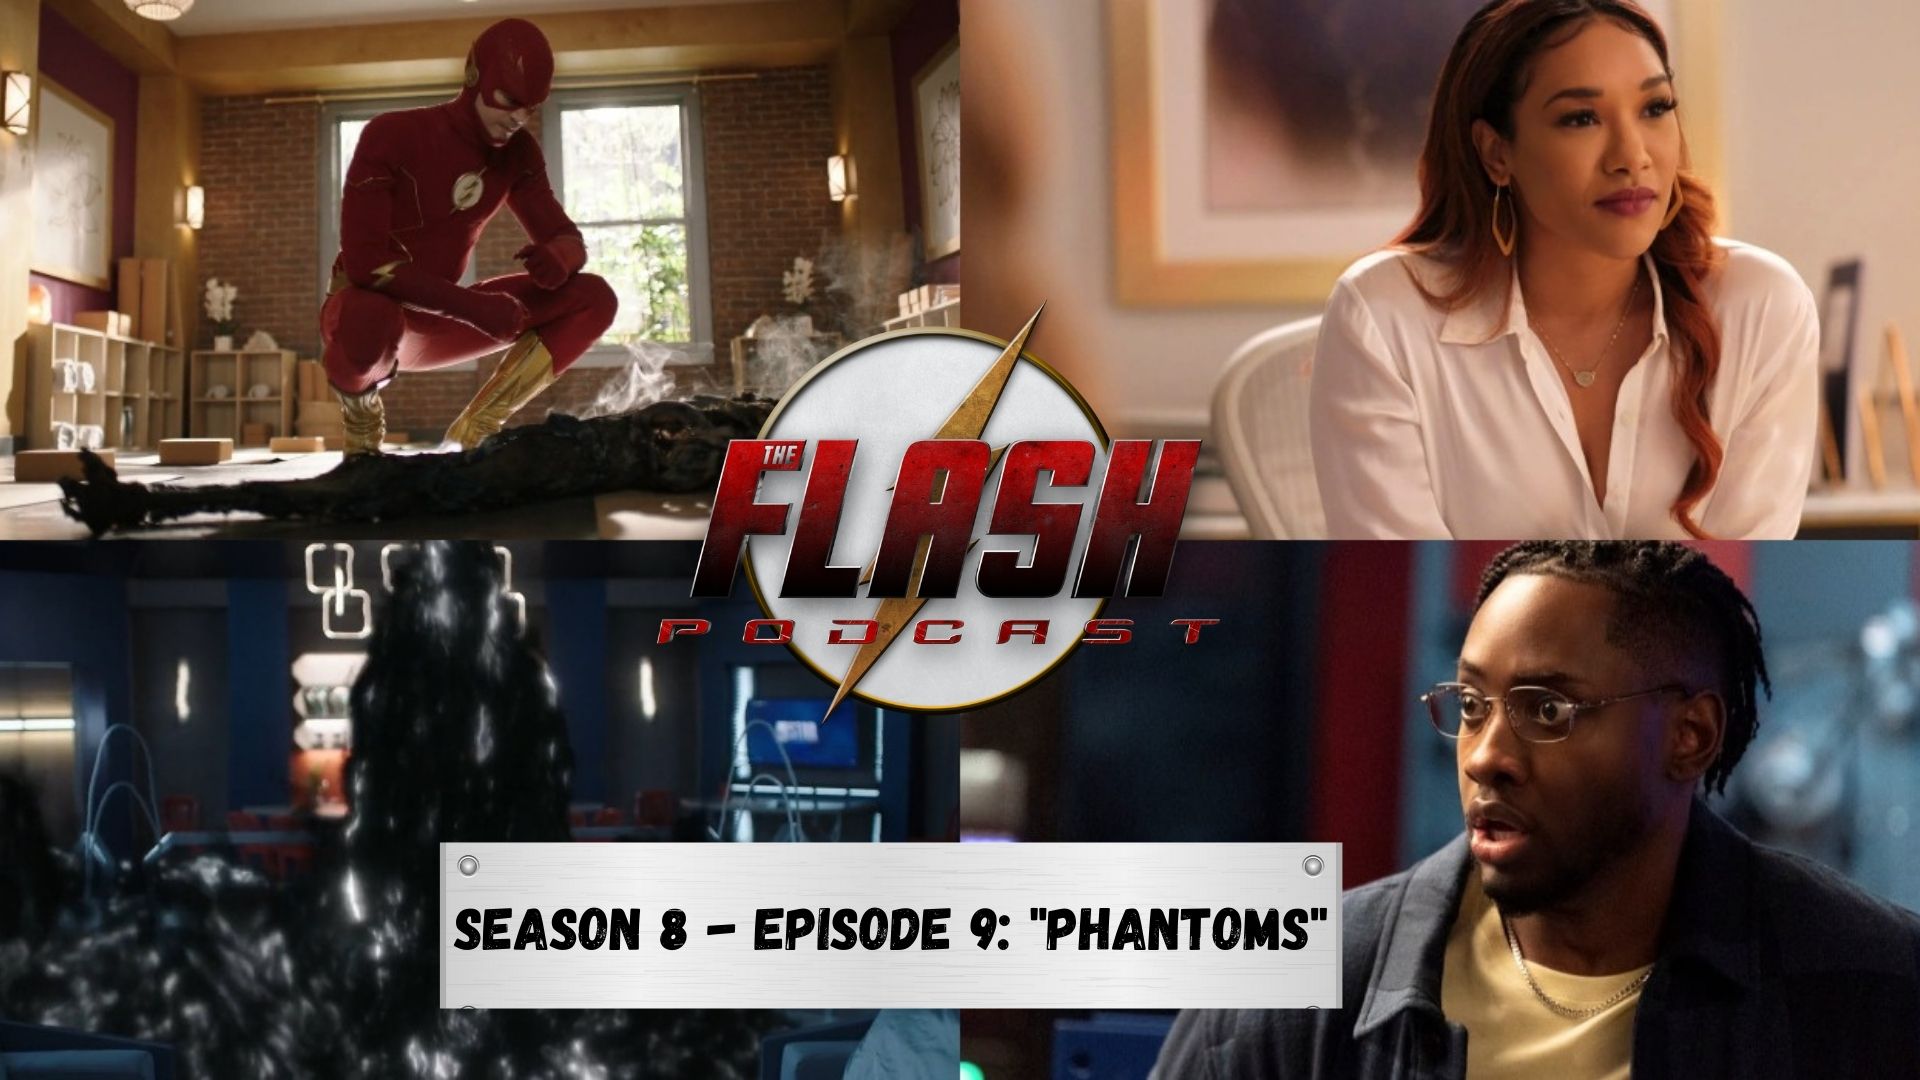 The Flash Podcast Season 8 Episode 9 Phantoms